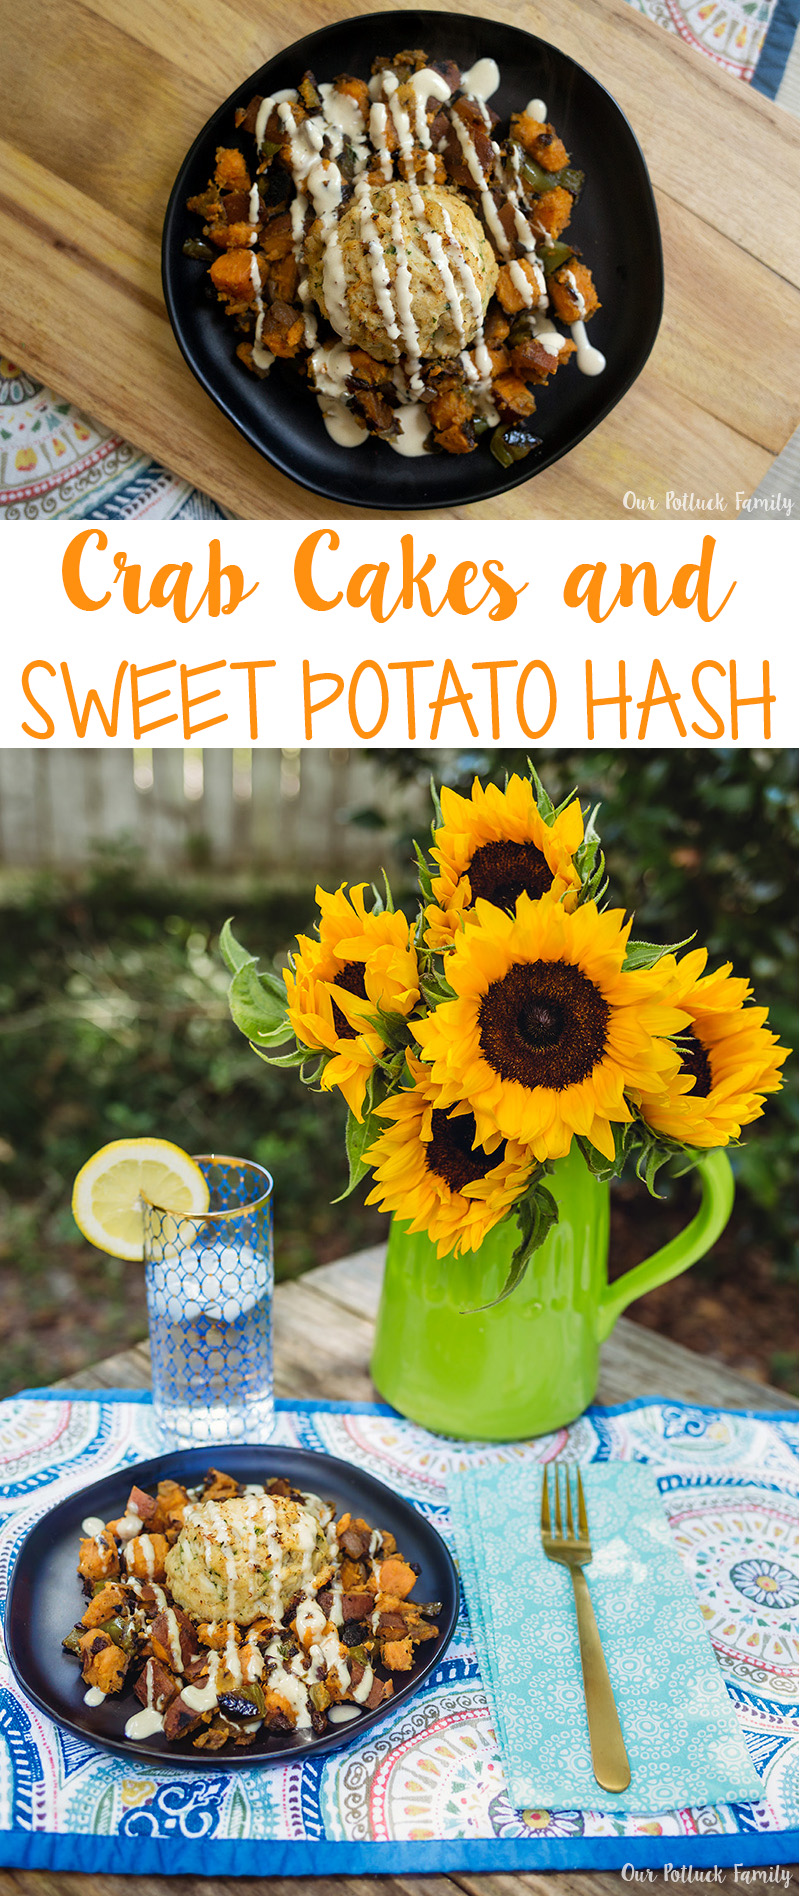 Crab Cakes and Sweet Potato Hash